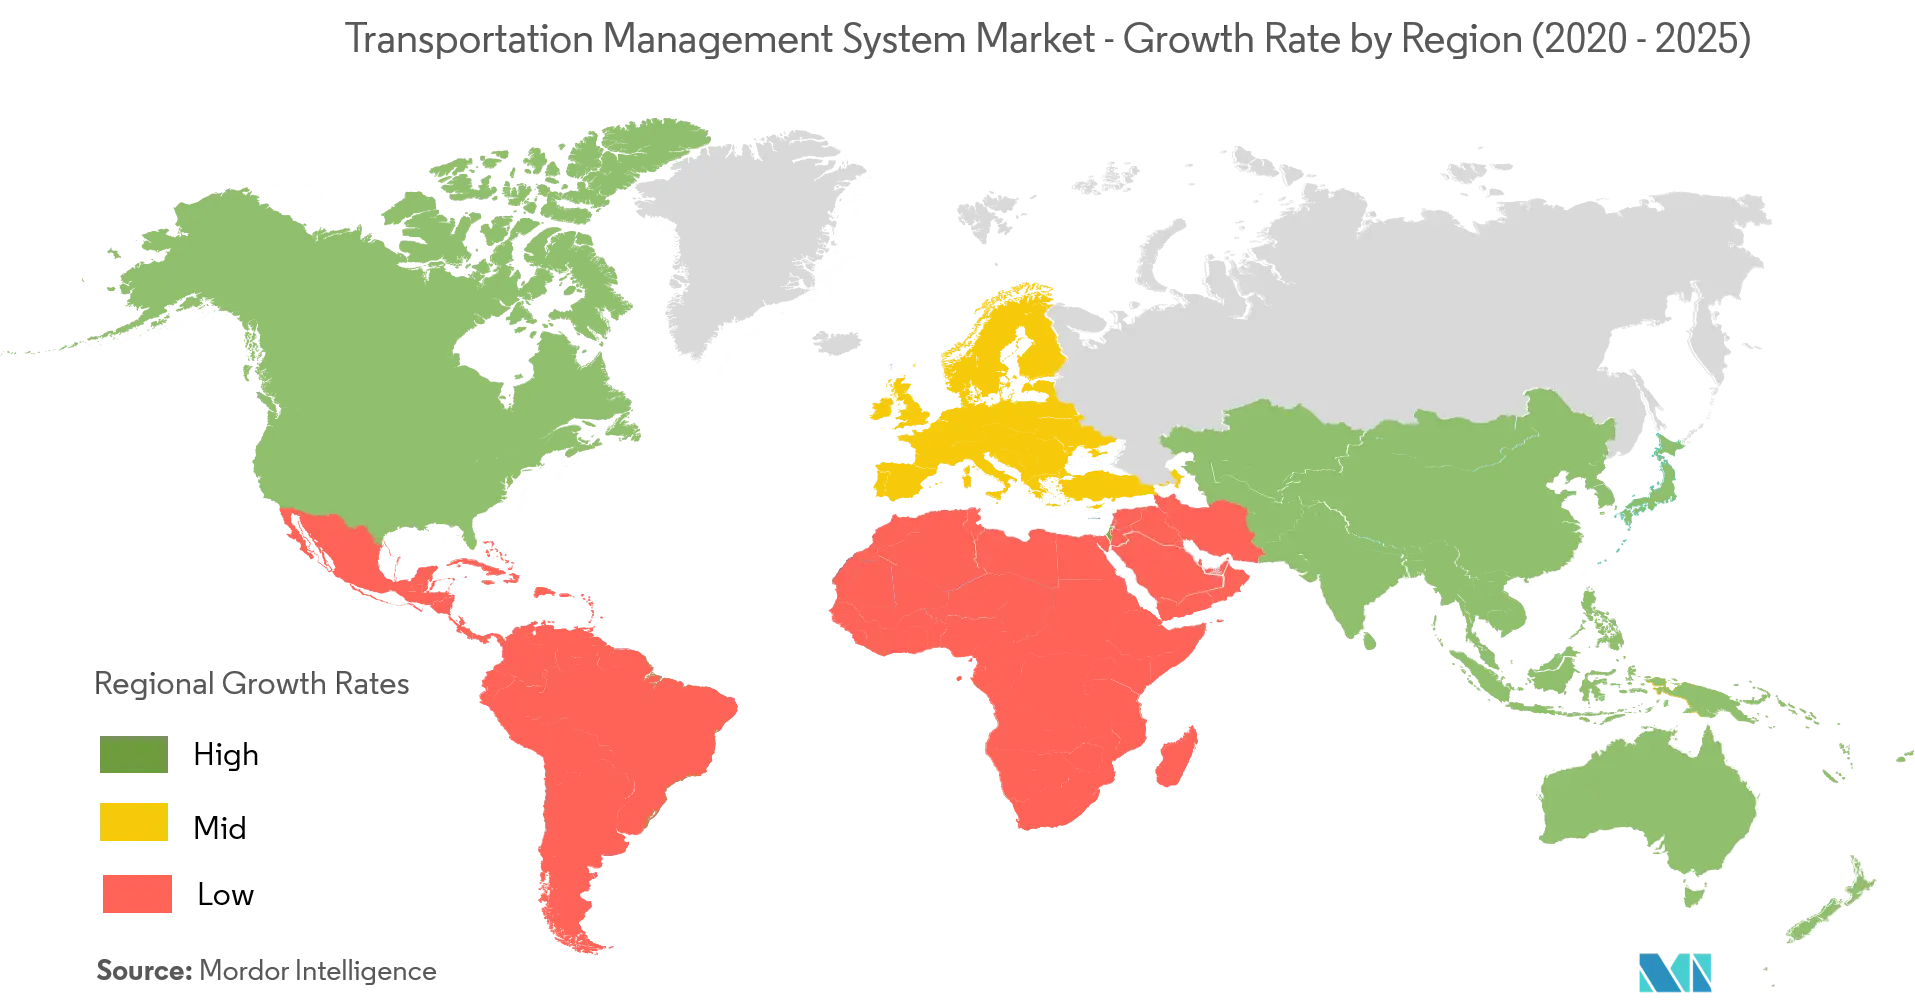 Transportation Management System Market Growth Rate